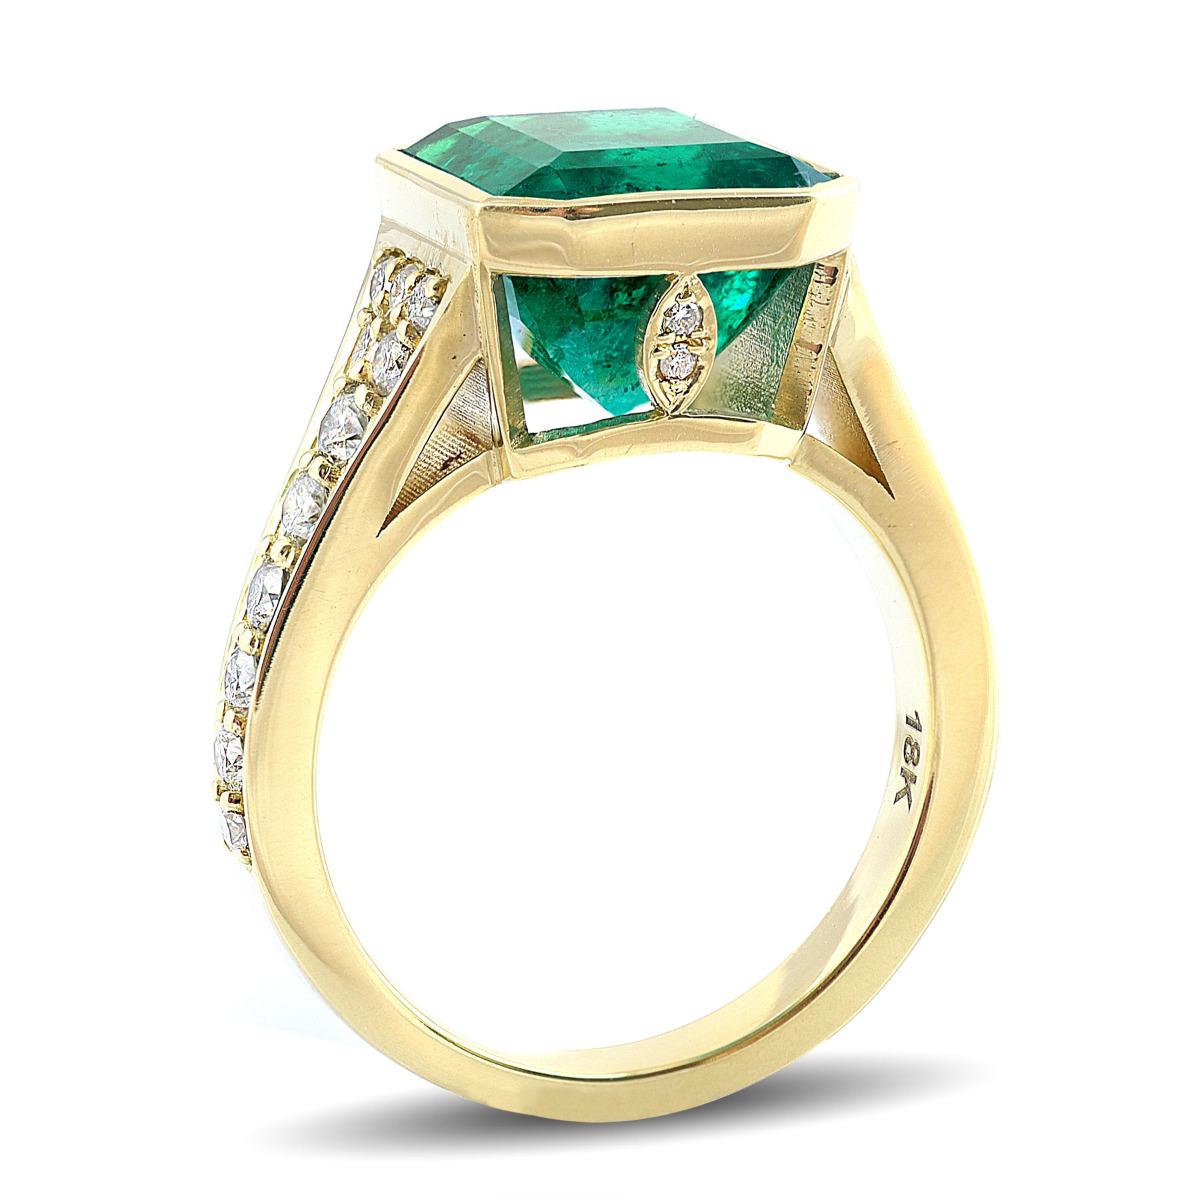 GIA zertifiziert 5,54 Karat kolumbianischen Smaragd Diamanten in 18K Gelbgold Ring gesetzt (Smaragdschliff) im Angebot